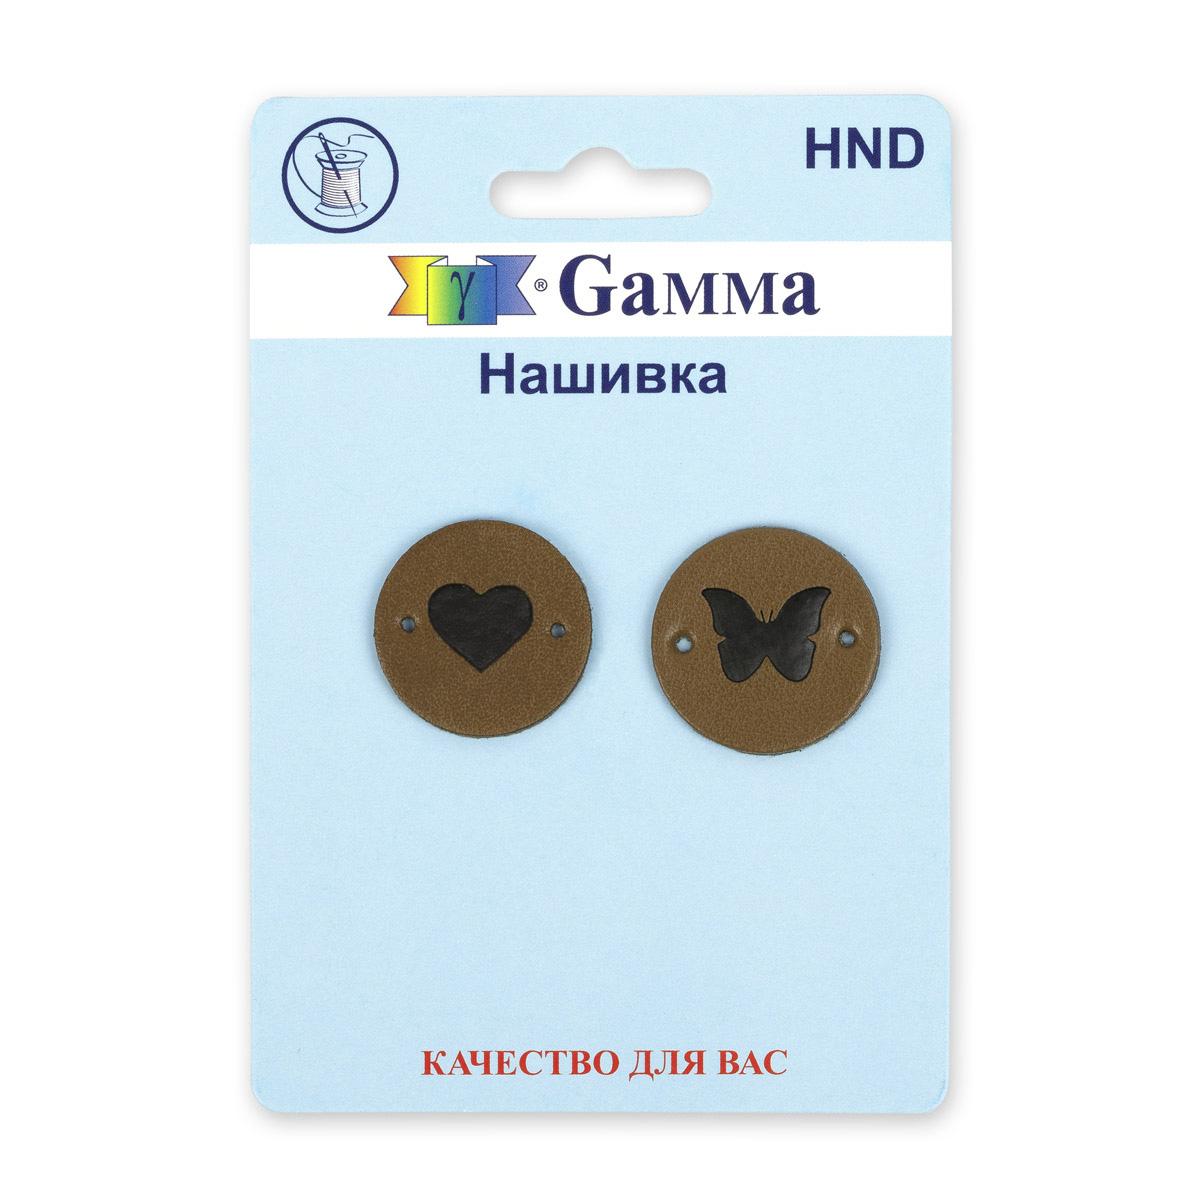 Gamma HND Нашивка handmade 05 5х2 шт.